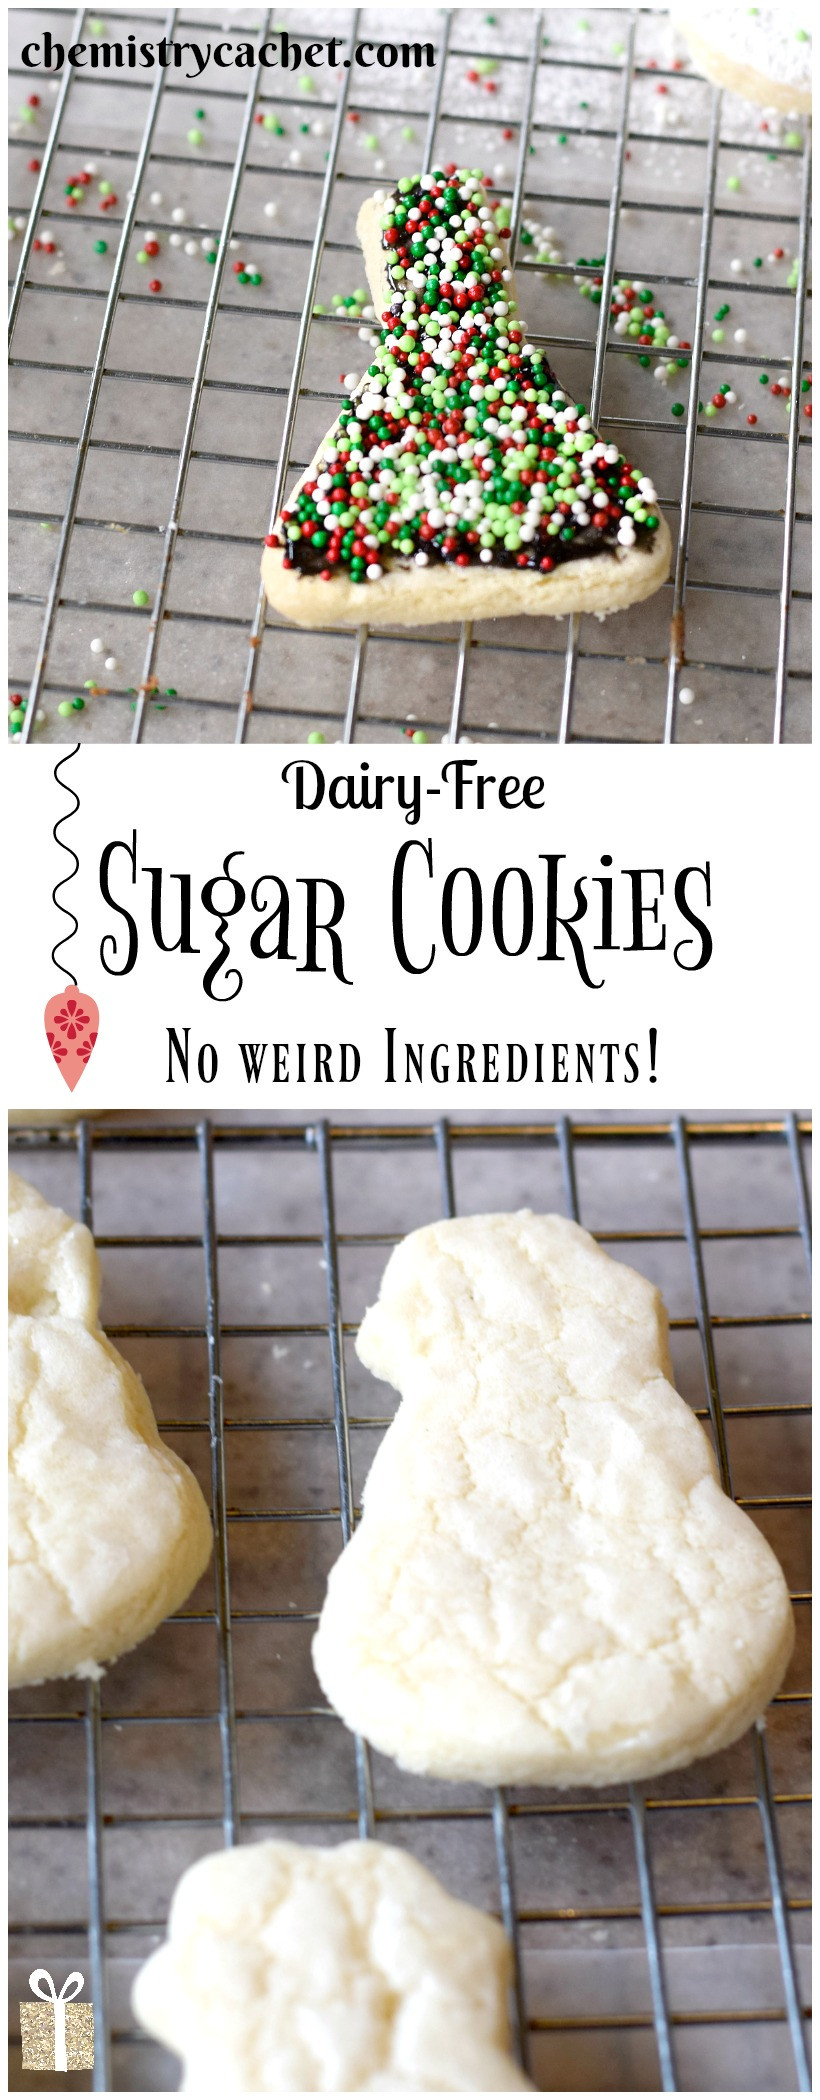 Sugar Free Sugar Cookies
 Foolproof Dairy Free Sugar Cookies Perfect for Cut Outs